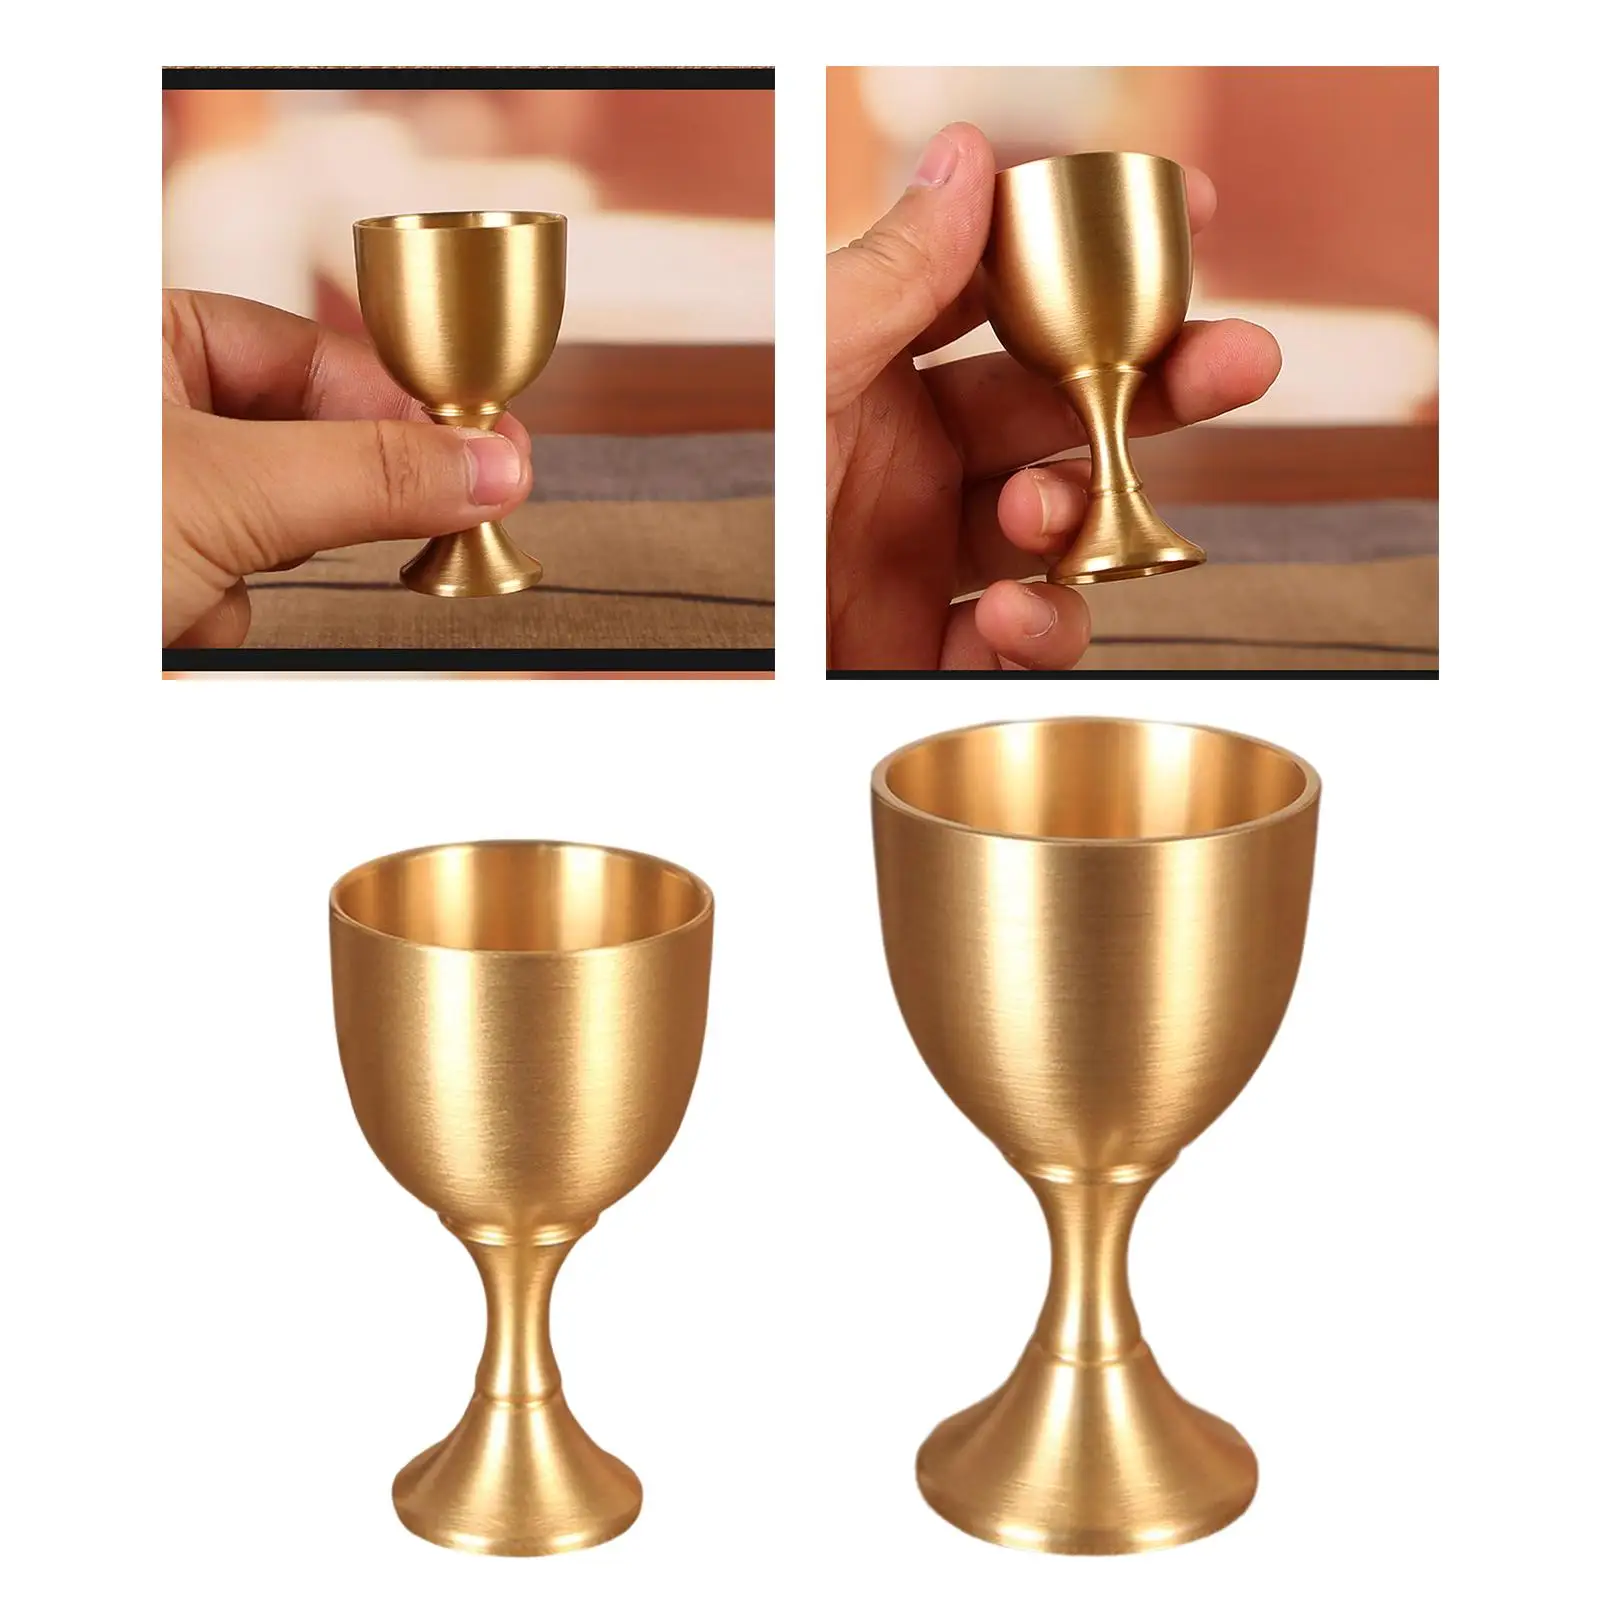 Vintage Brass Wine Glass Goblet Drink Cup Durable Reusable Liquor Tumbler Cocktail Glasses for Club party Decor Props